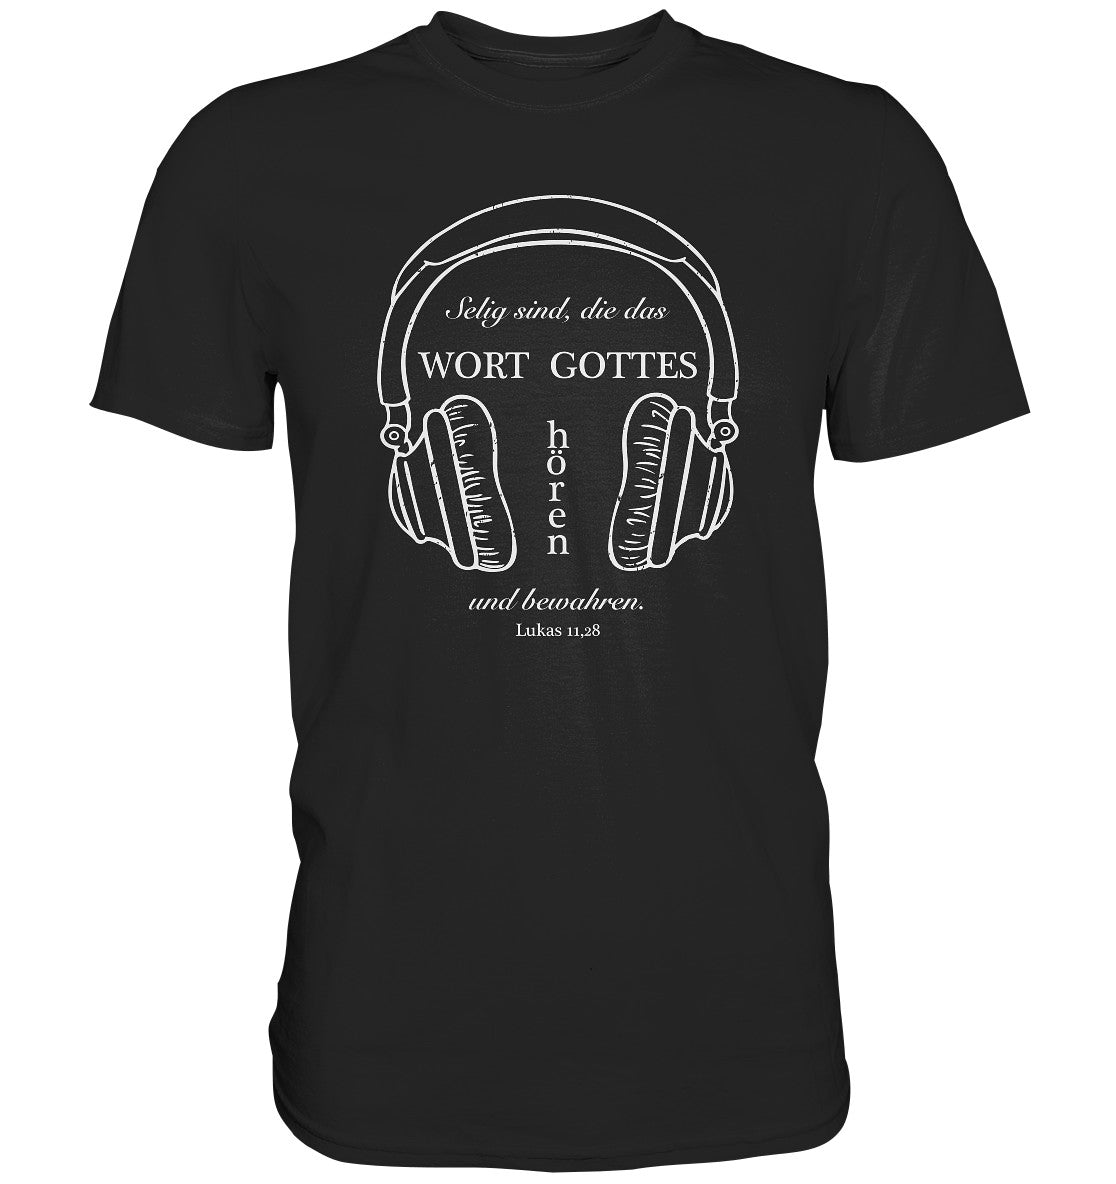 Lk 11,28 - Wort Gottes hören - Premium Shirt